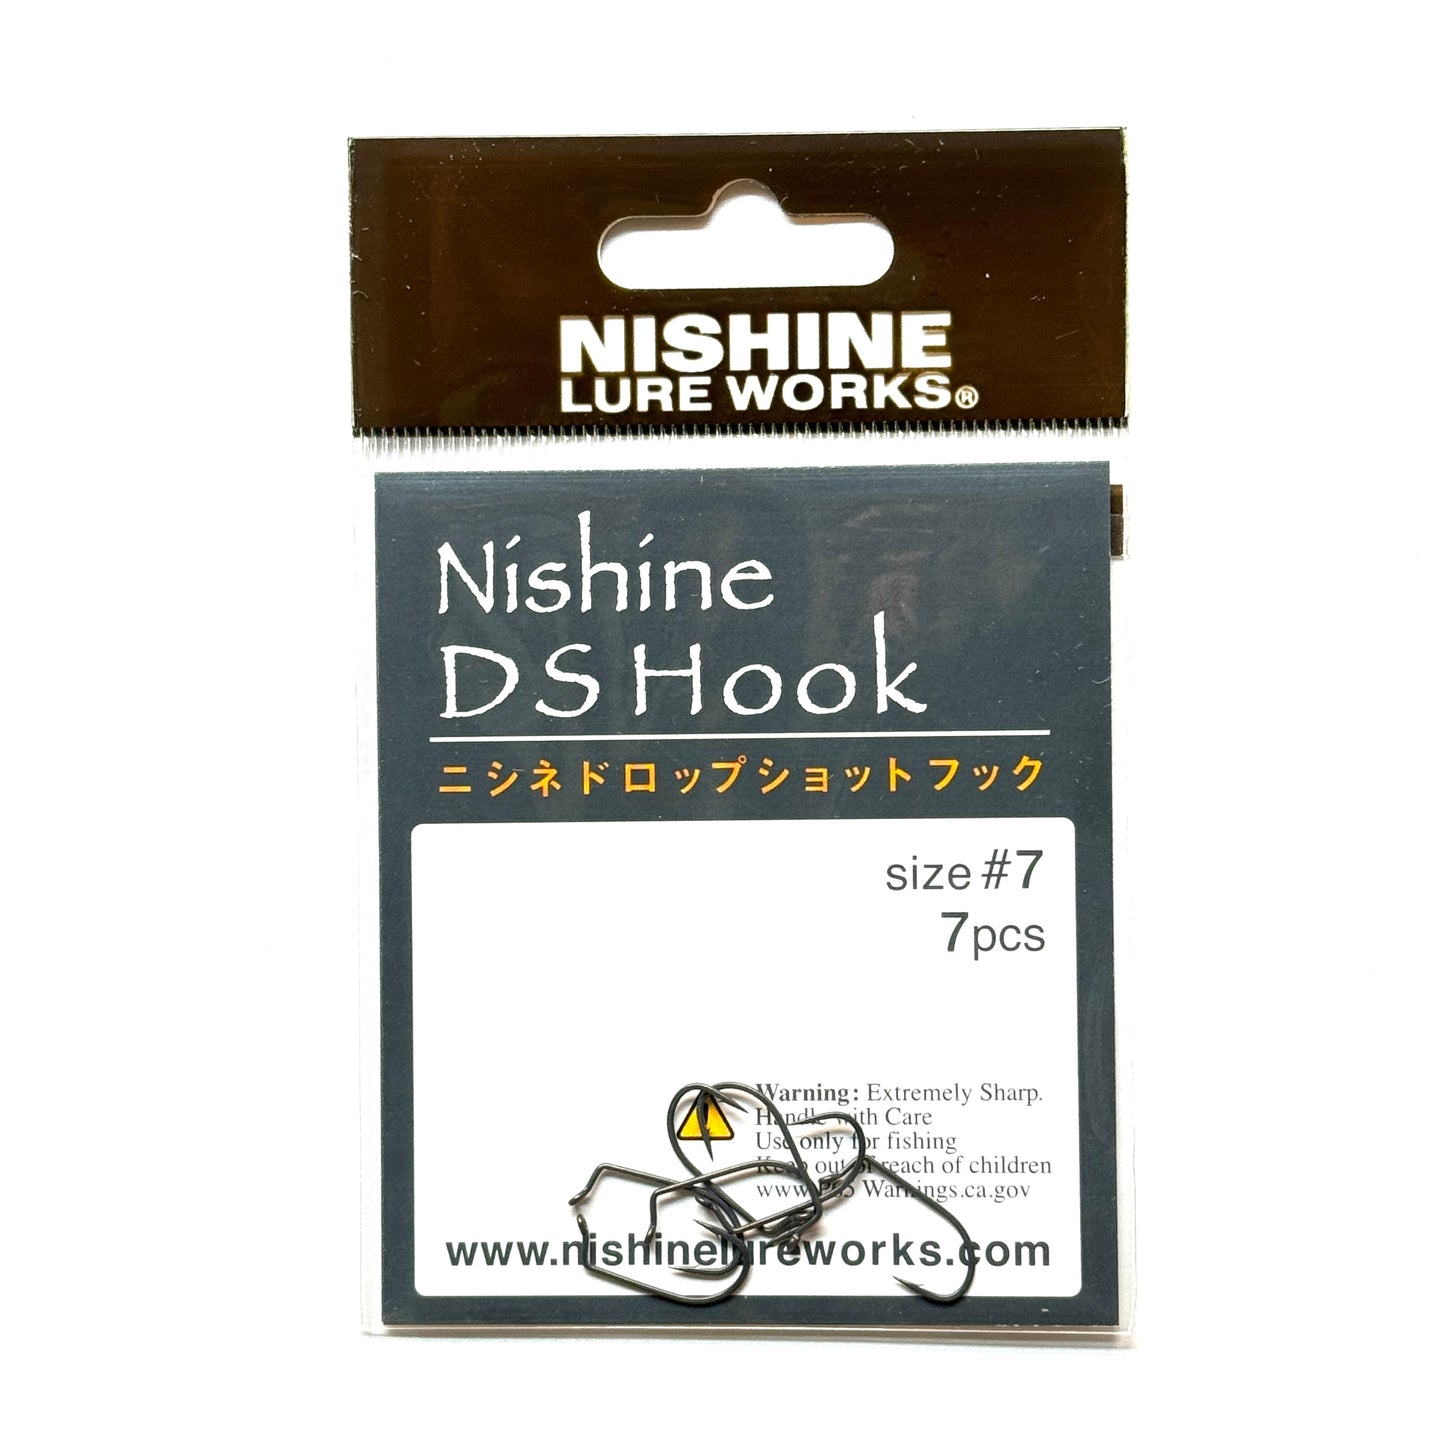 Nishine DS Hook